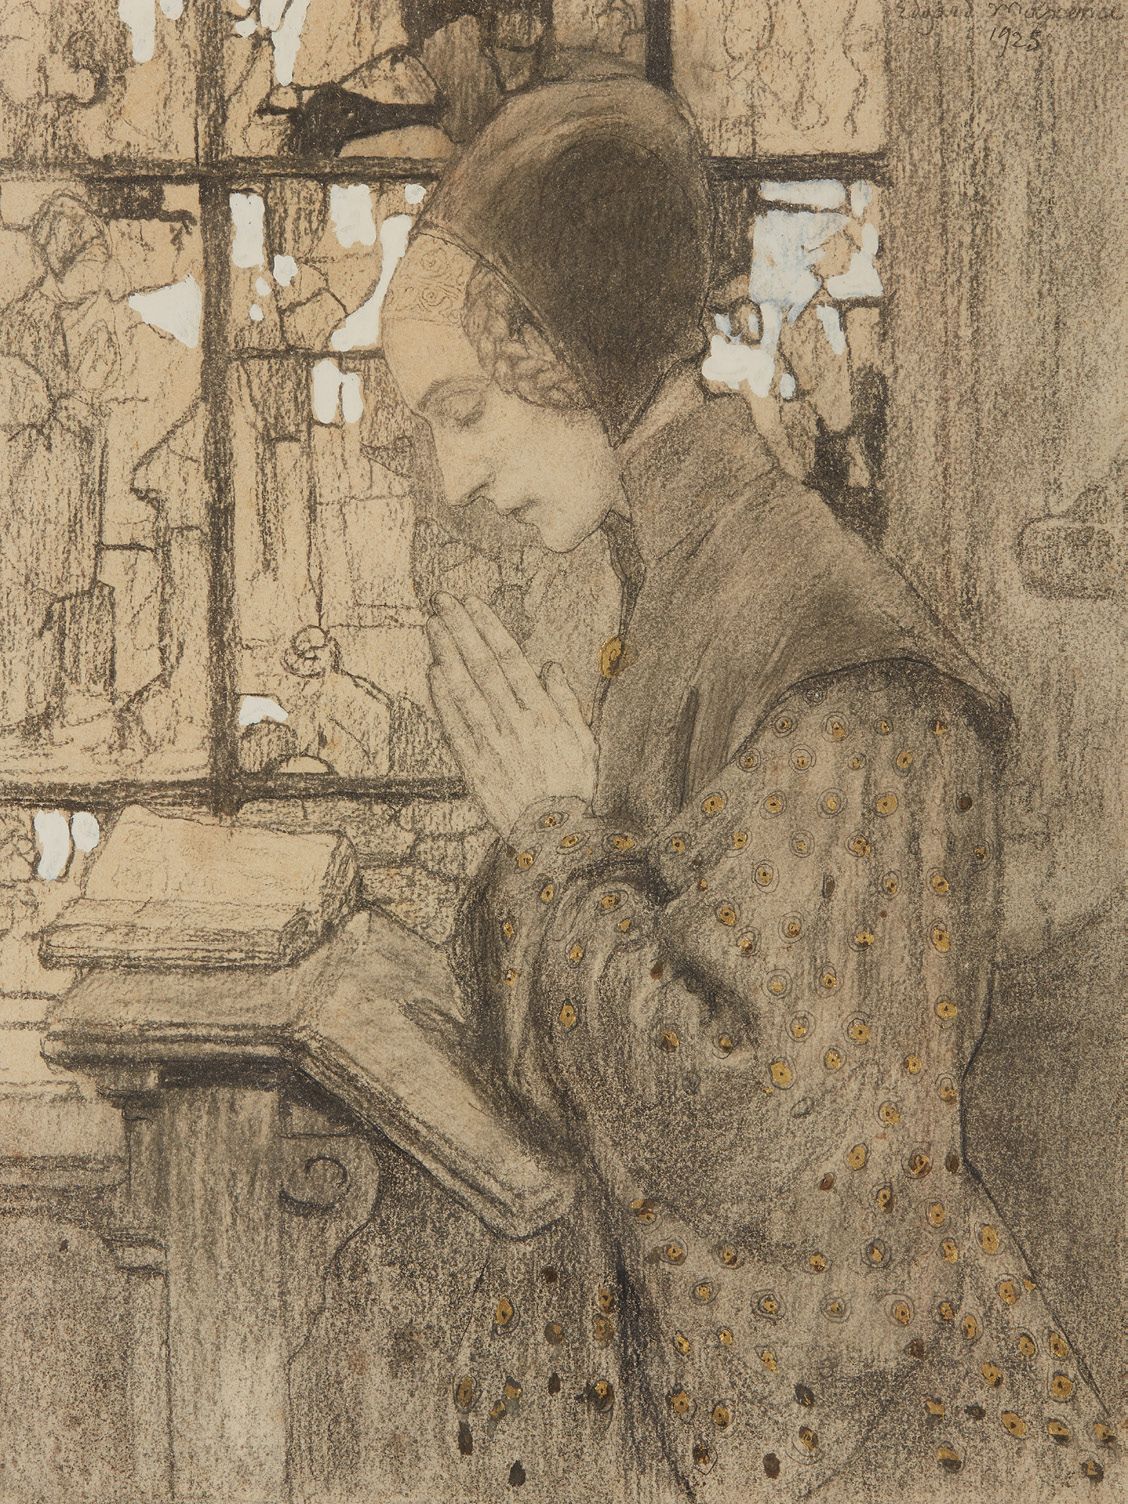 Edgard MAXENCE (1871-1954) 戴头饰的女人抱着一只鸟，1925年
铅笔，金色高光和白色水粉，右下角有签名和日期。
29 x 22 cm